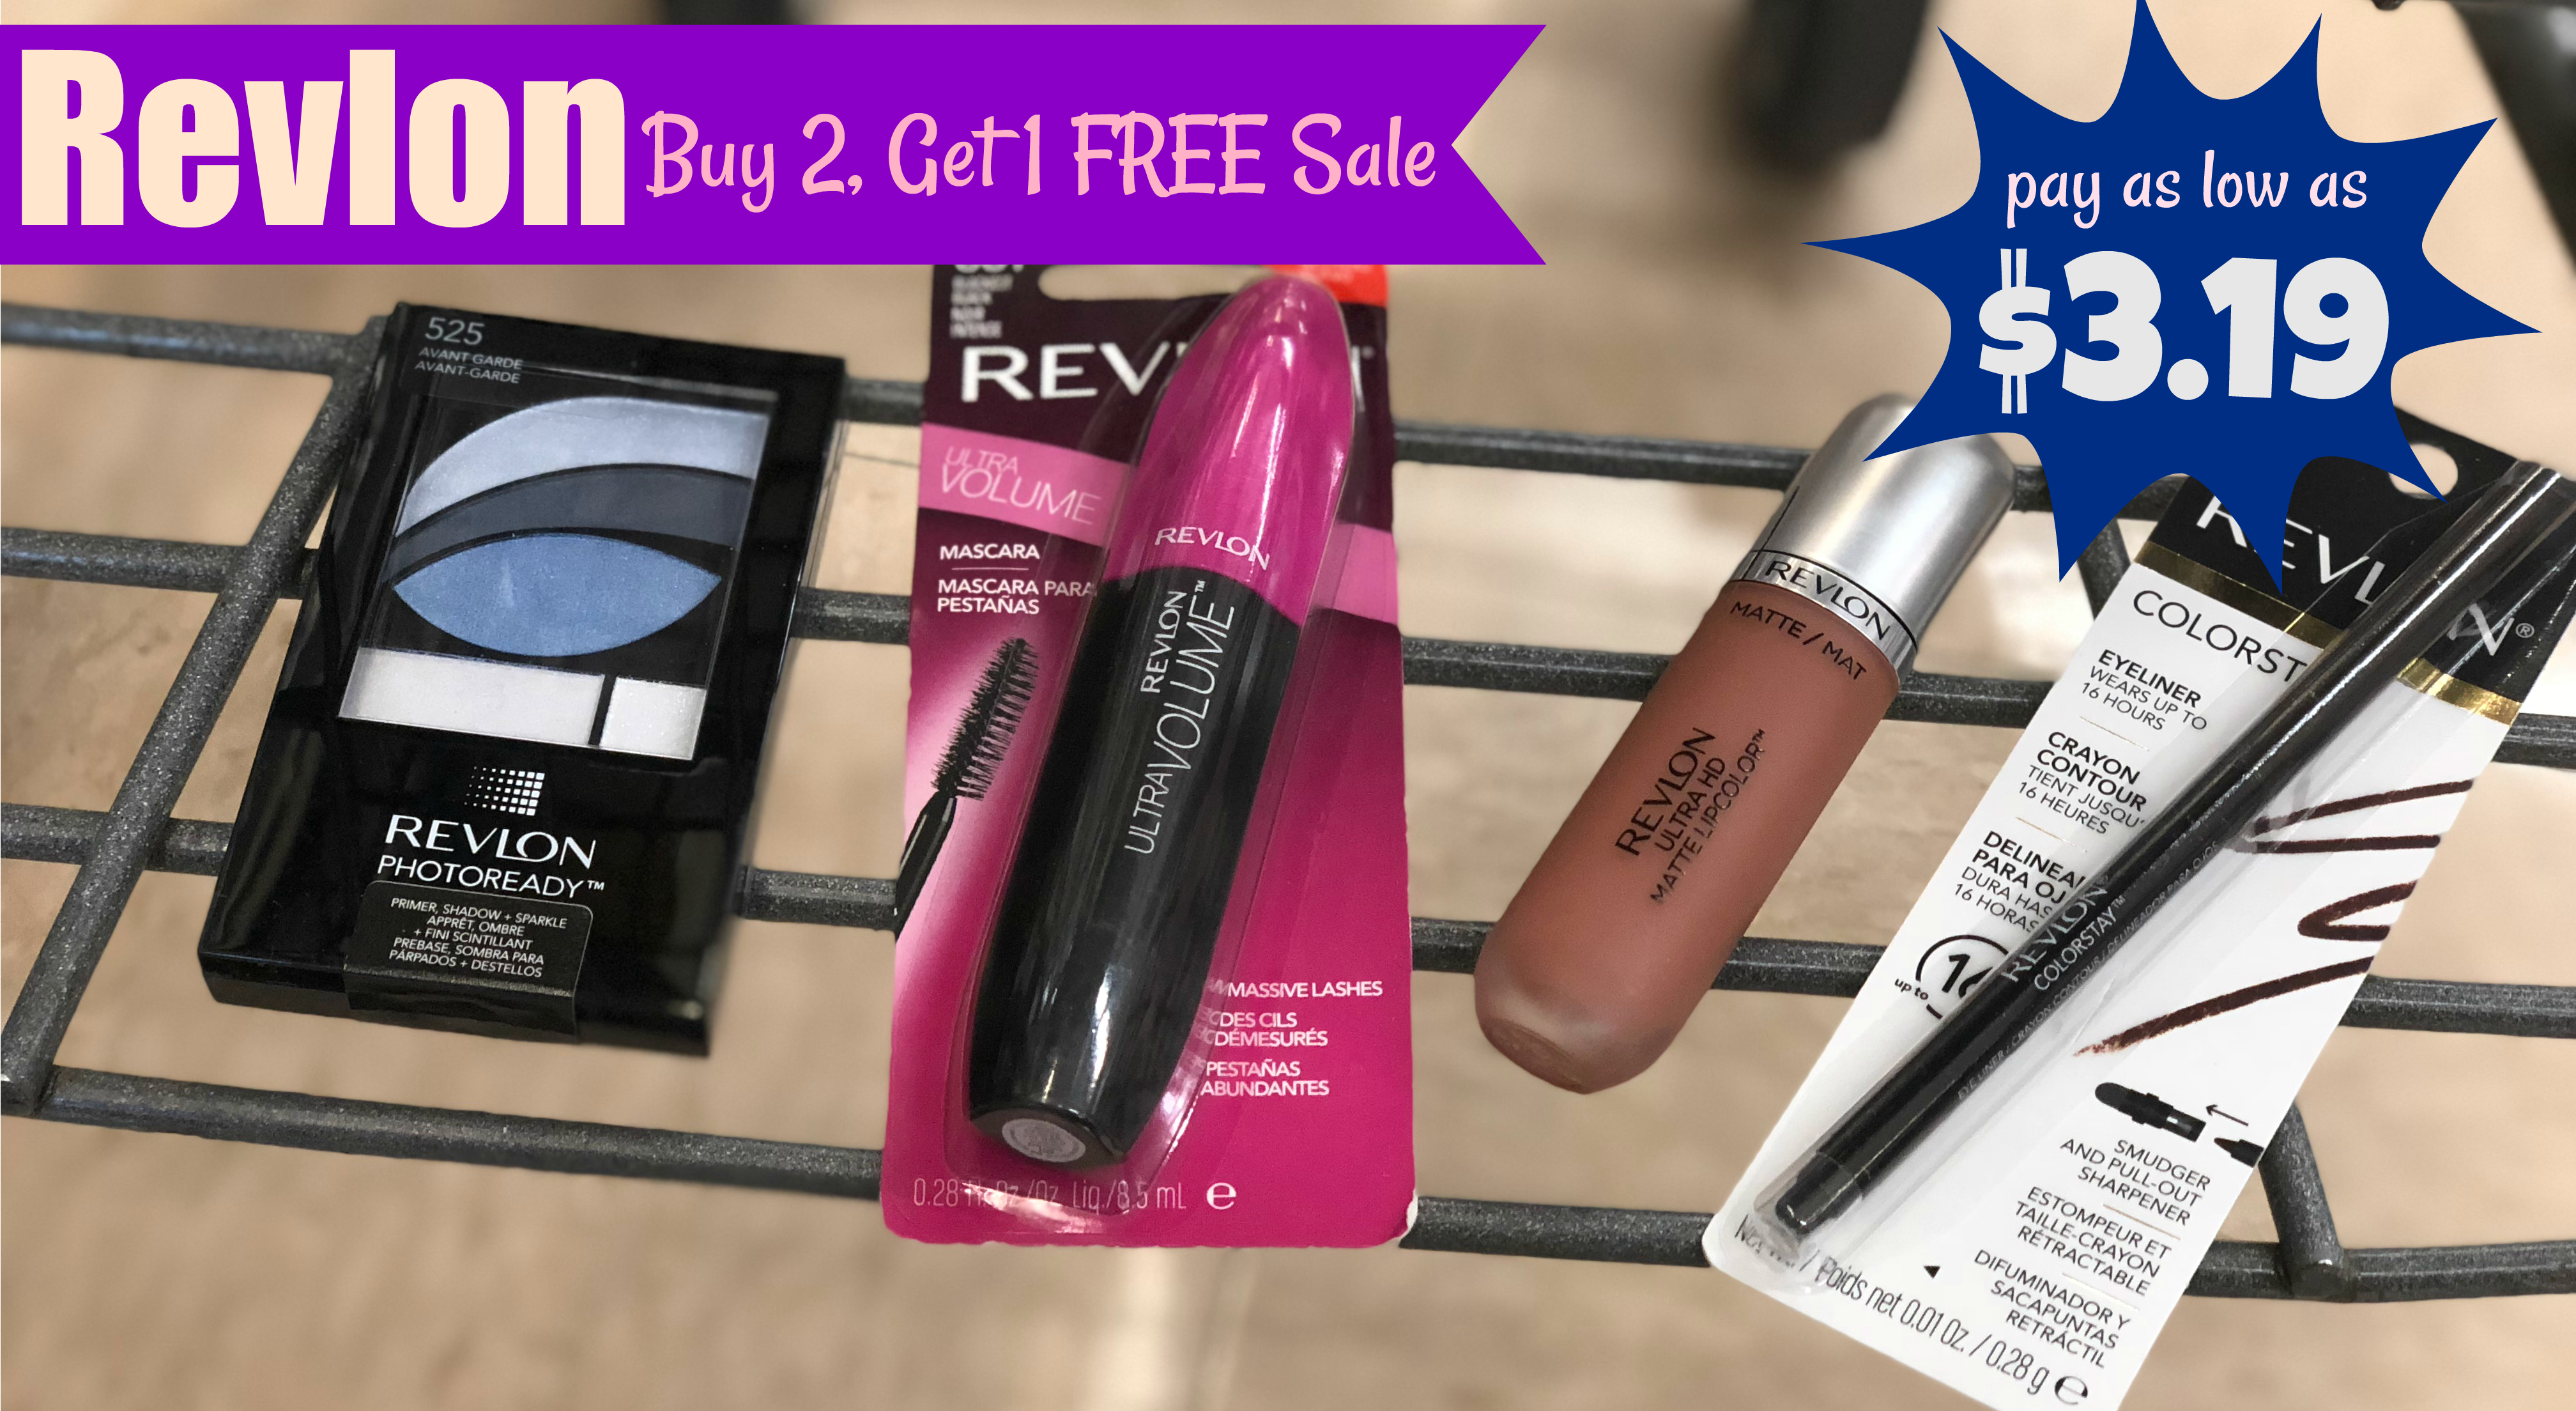 Revlon Makeup Deals at Kroger with B2G1 Free Sale! Pay as low as $3.19! -  Kroger Krazy